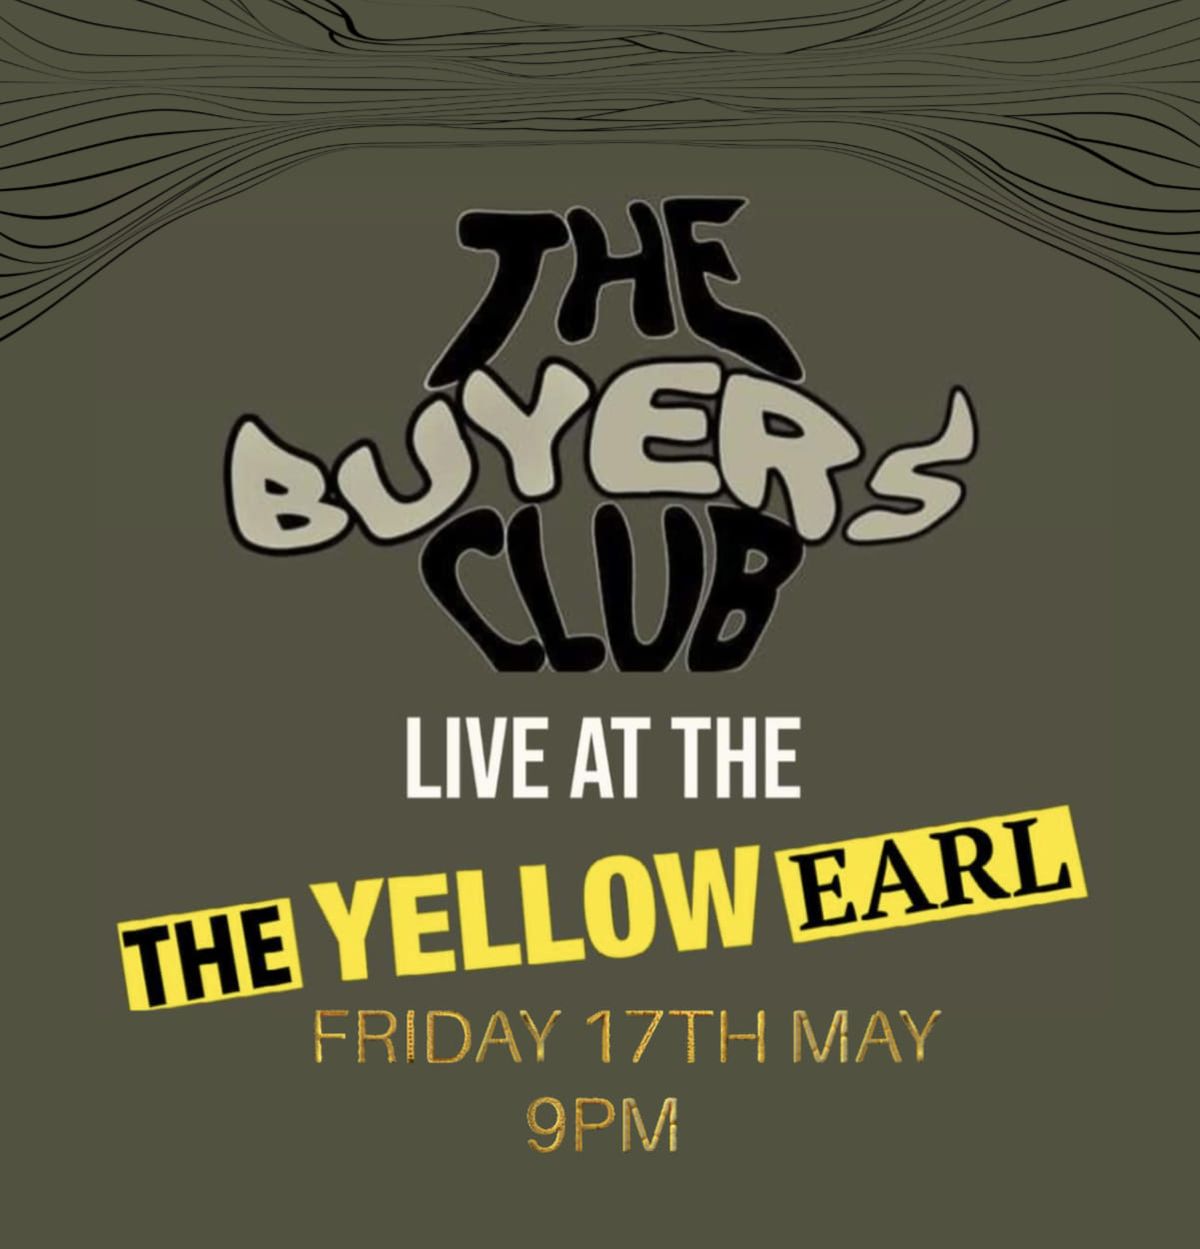 buyers club @ the yellow earl